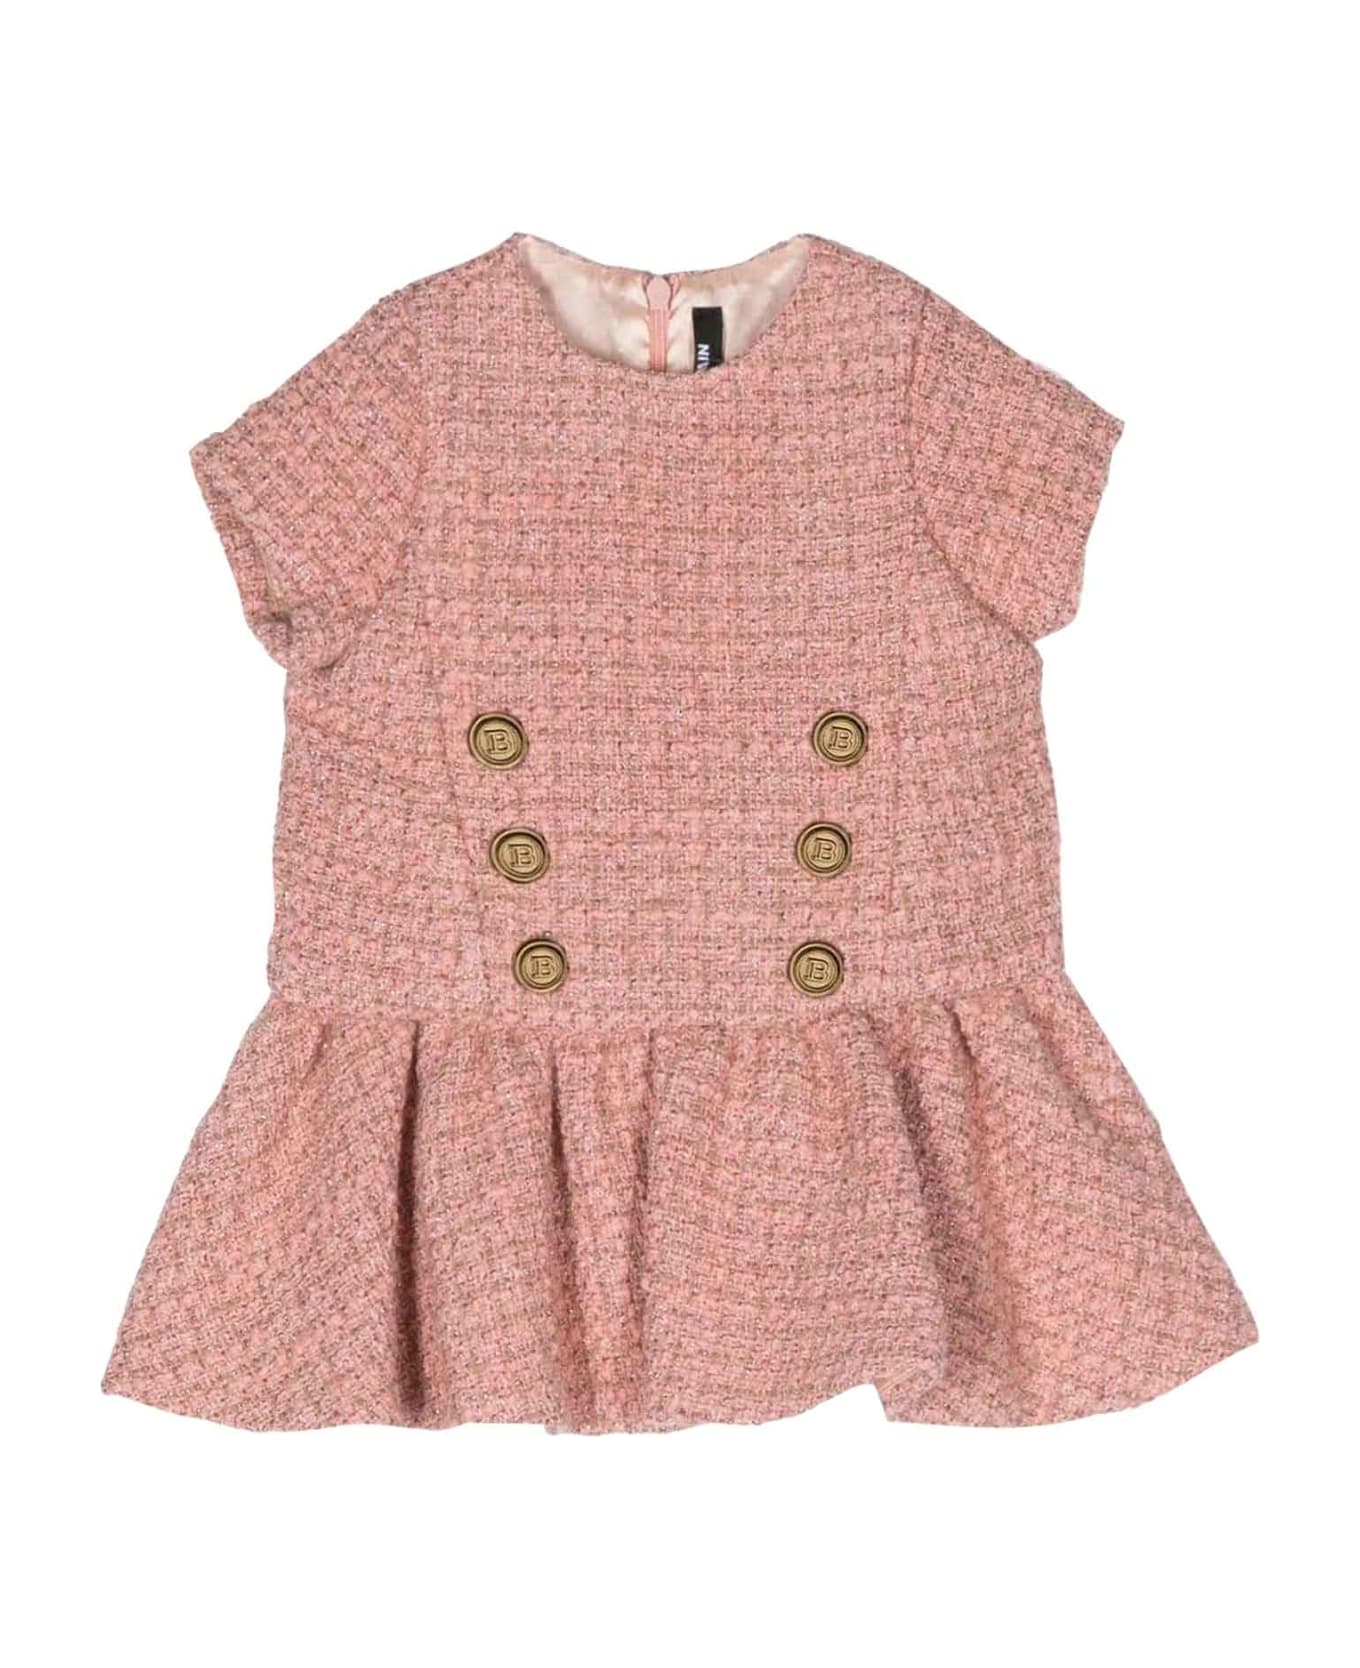 Balmain Pink Dress Baby Girl - Rosa